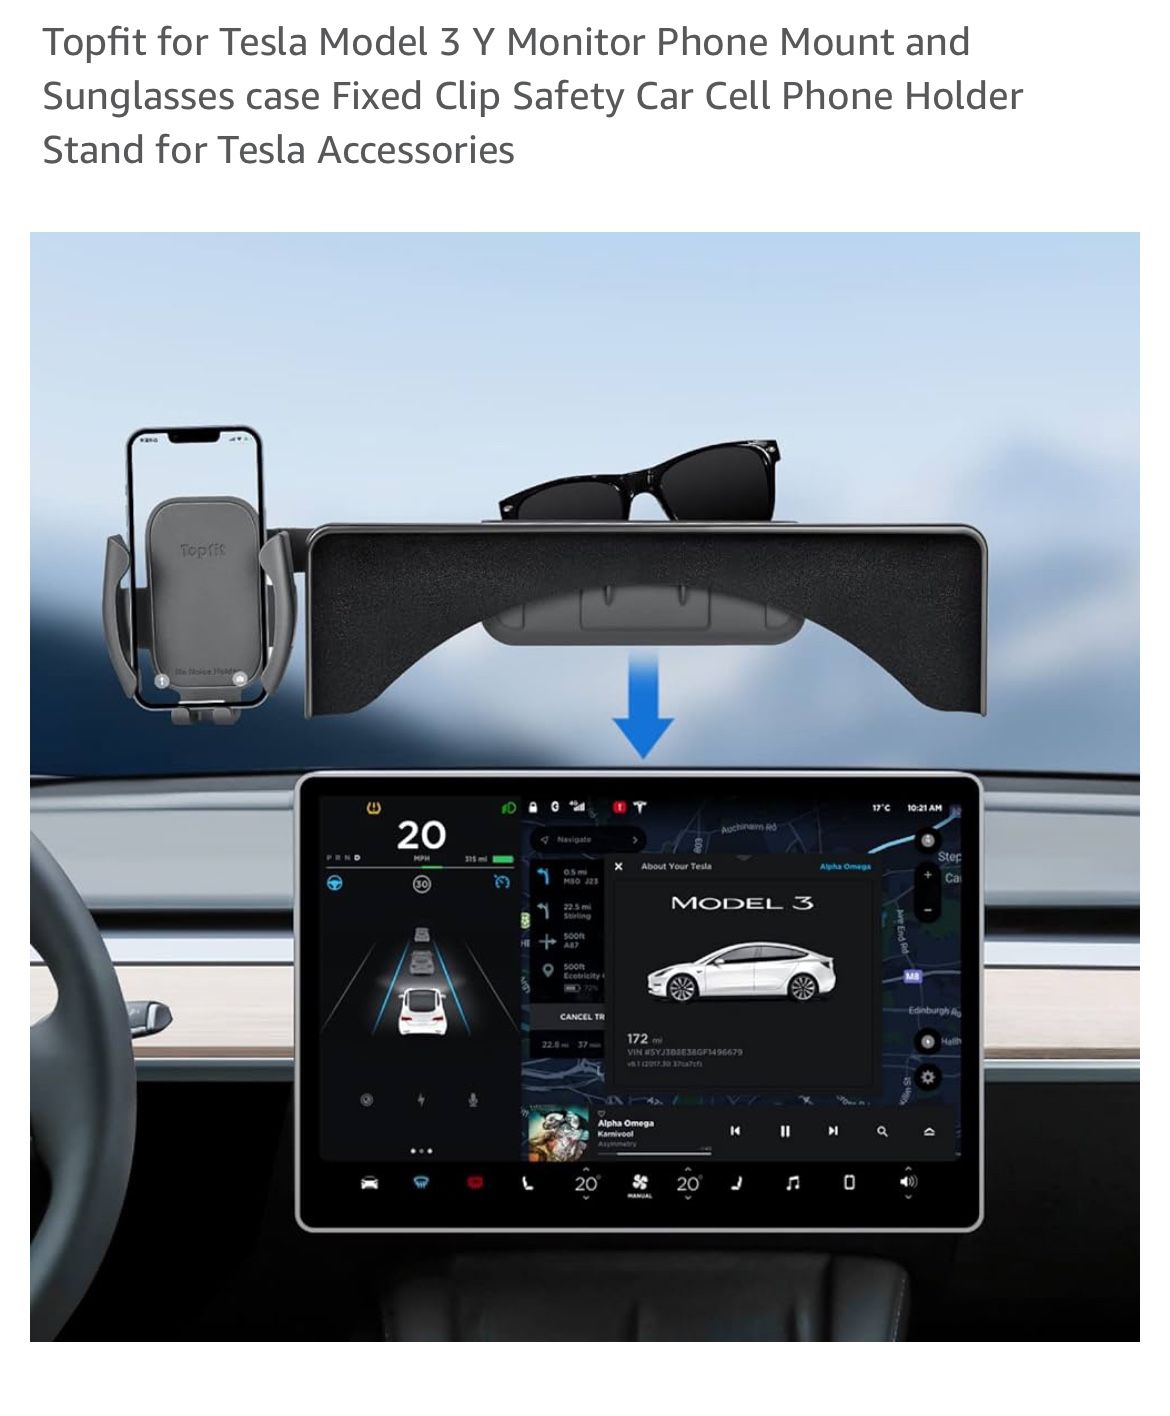 Tesla Model Y Or 3 Topfit Accessory holder